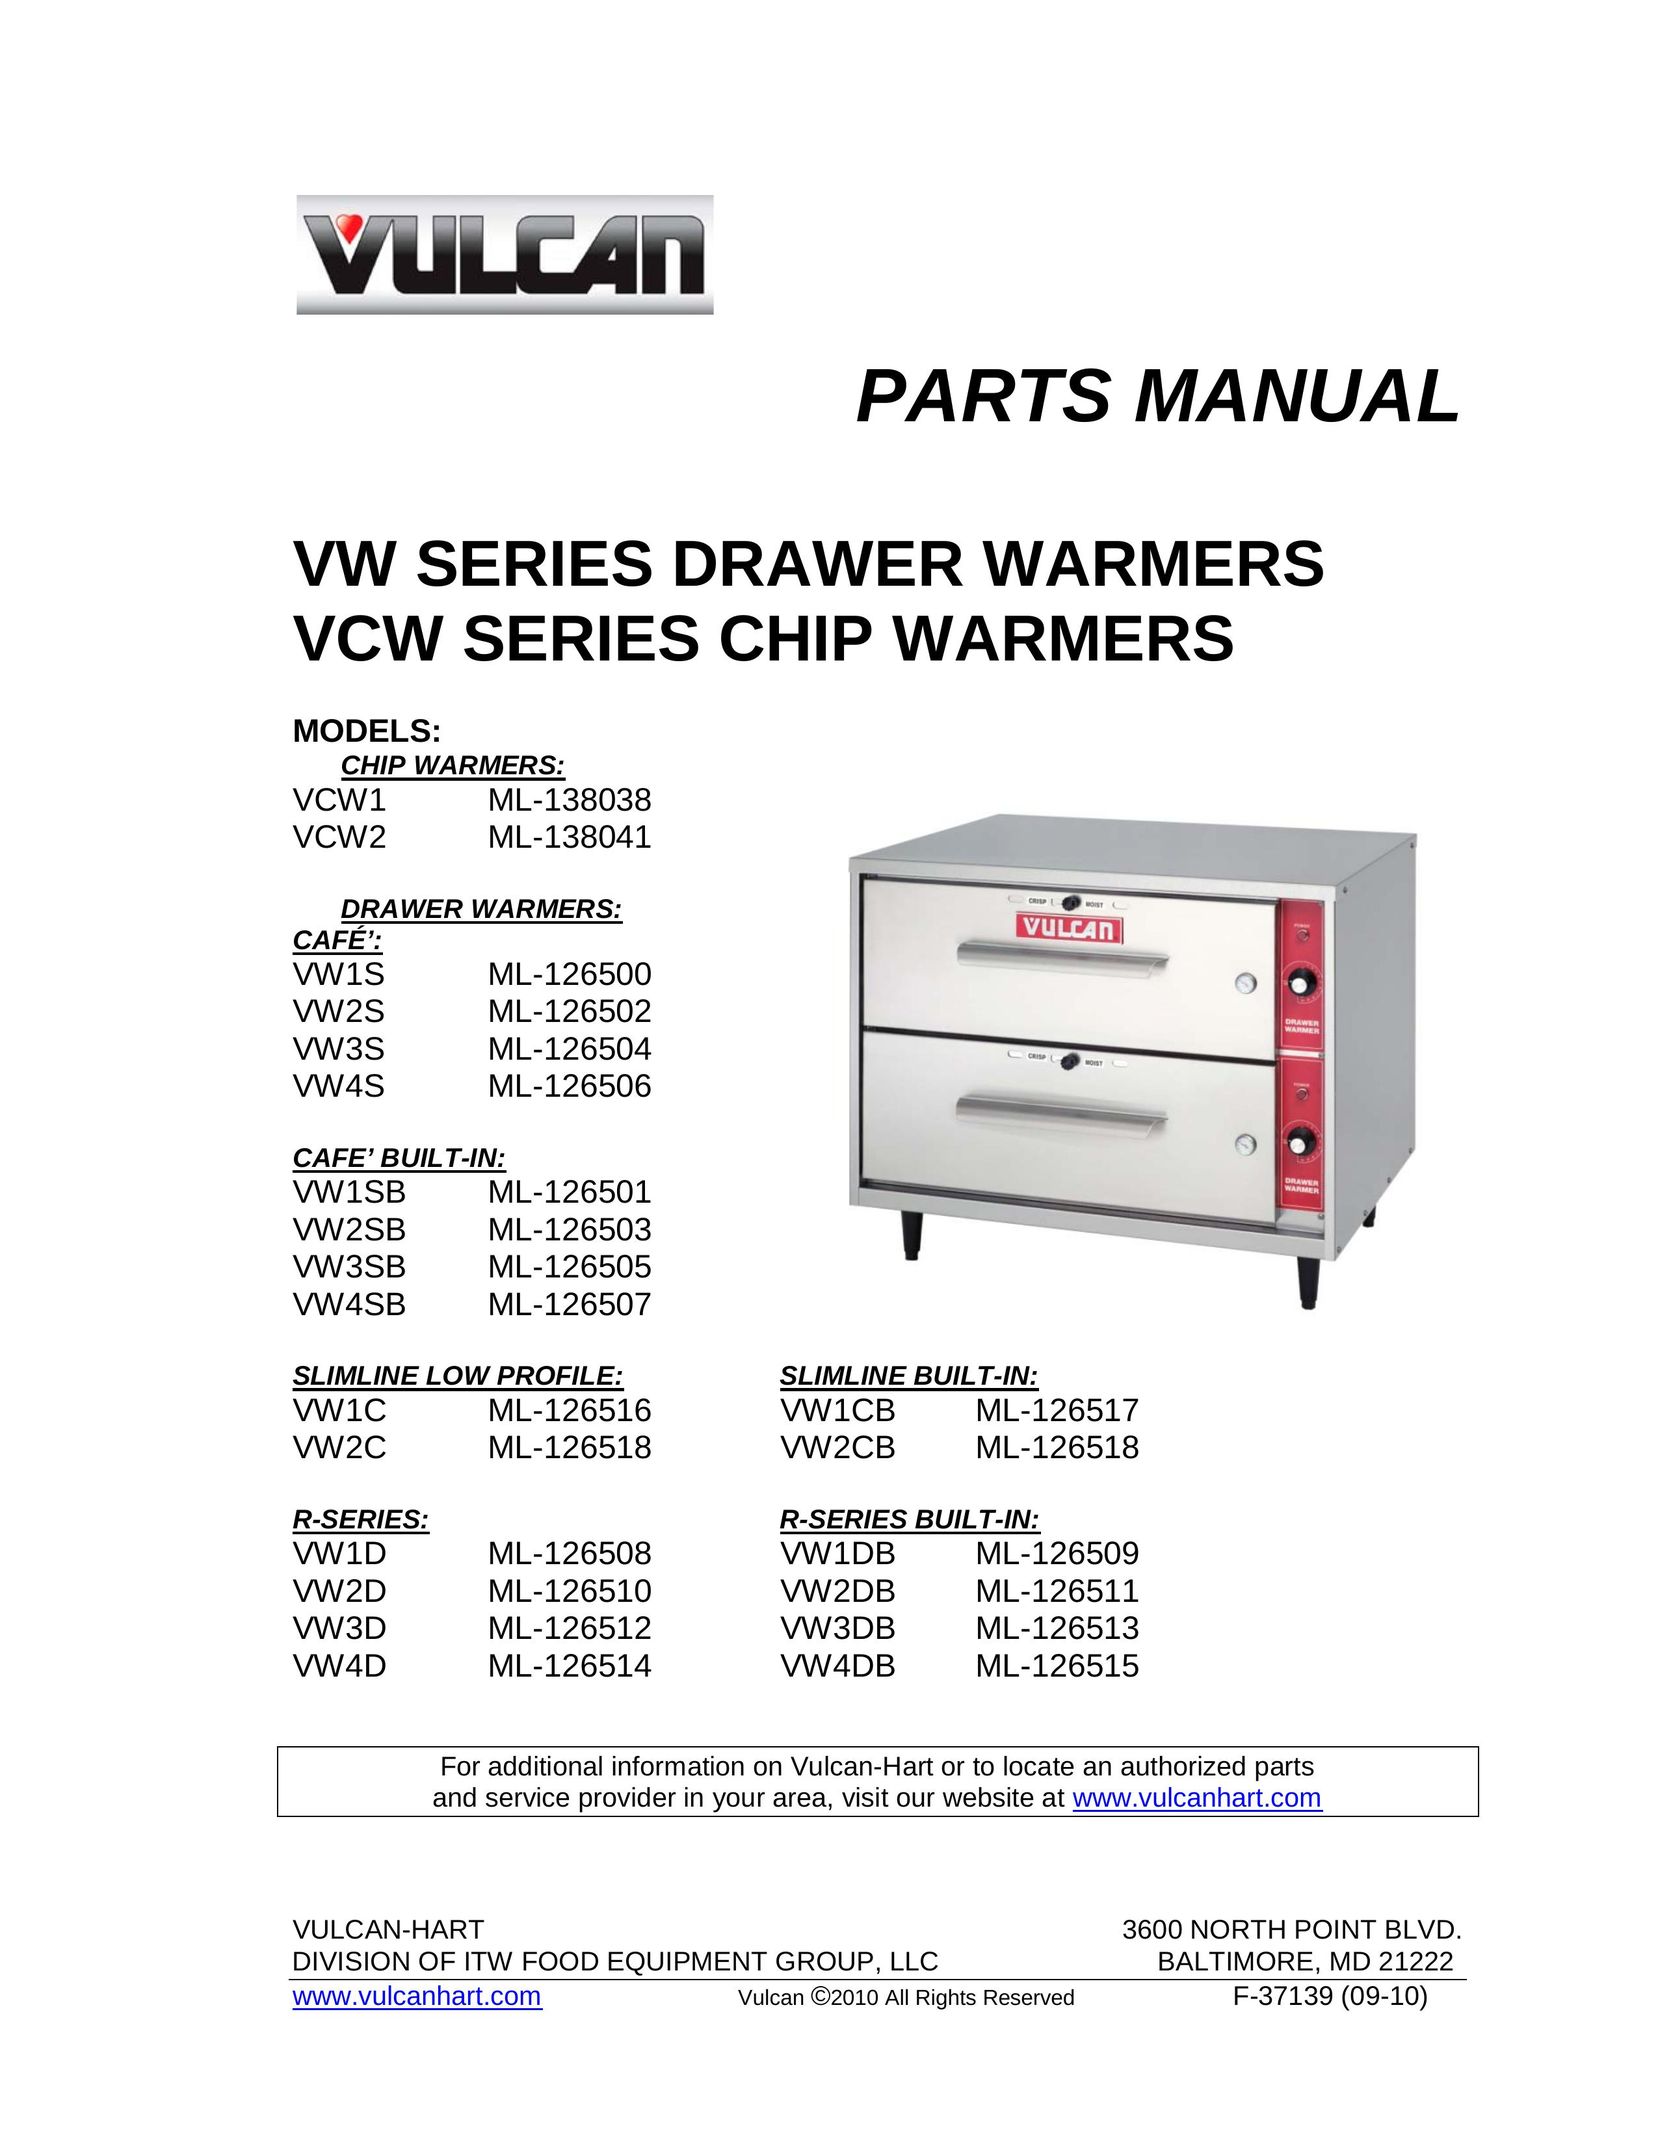 Vulcan-Hart VCW1 ML-138038 Food Warmer User Manual